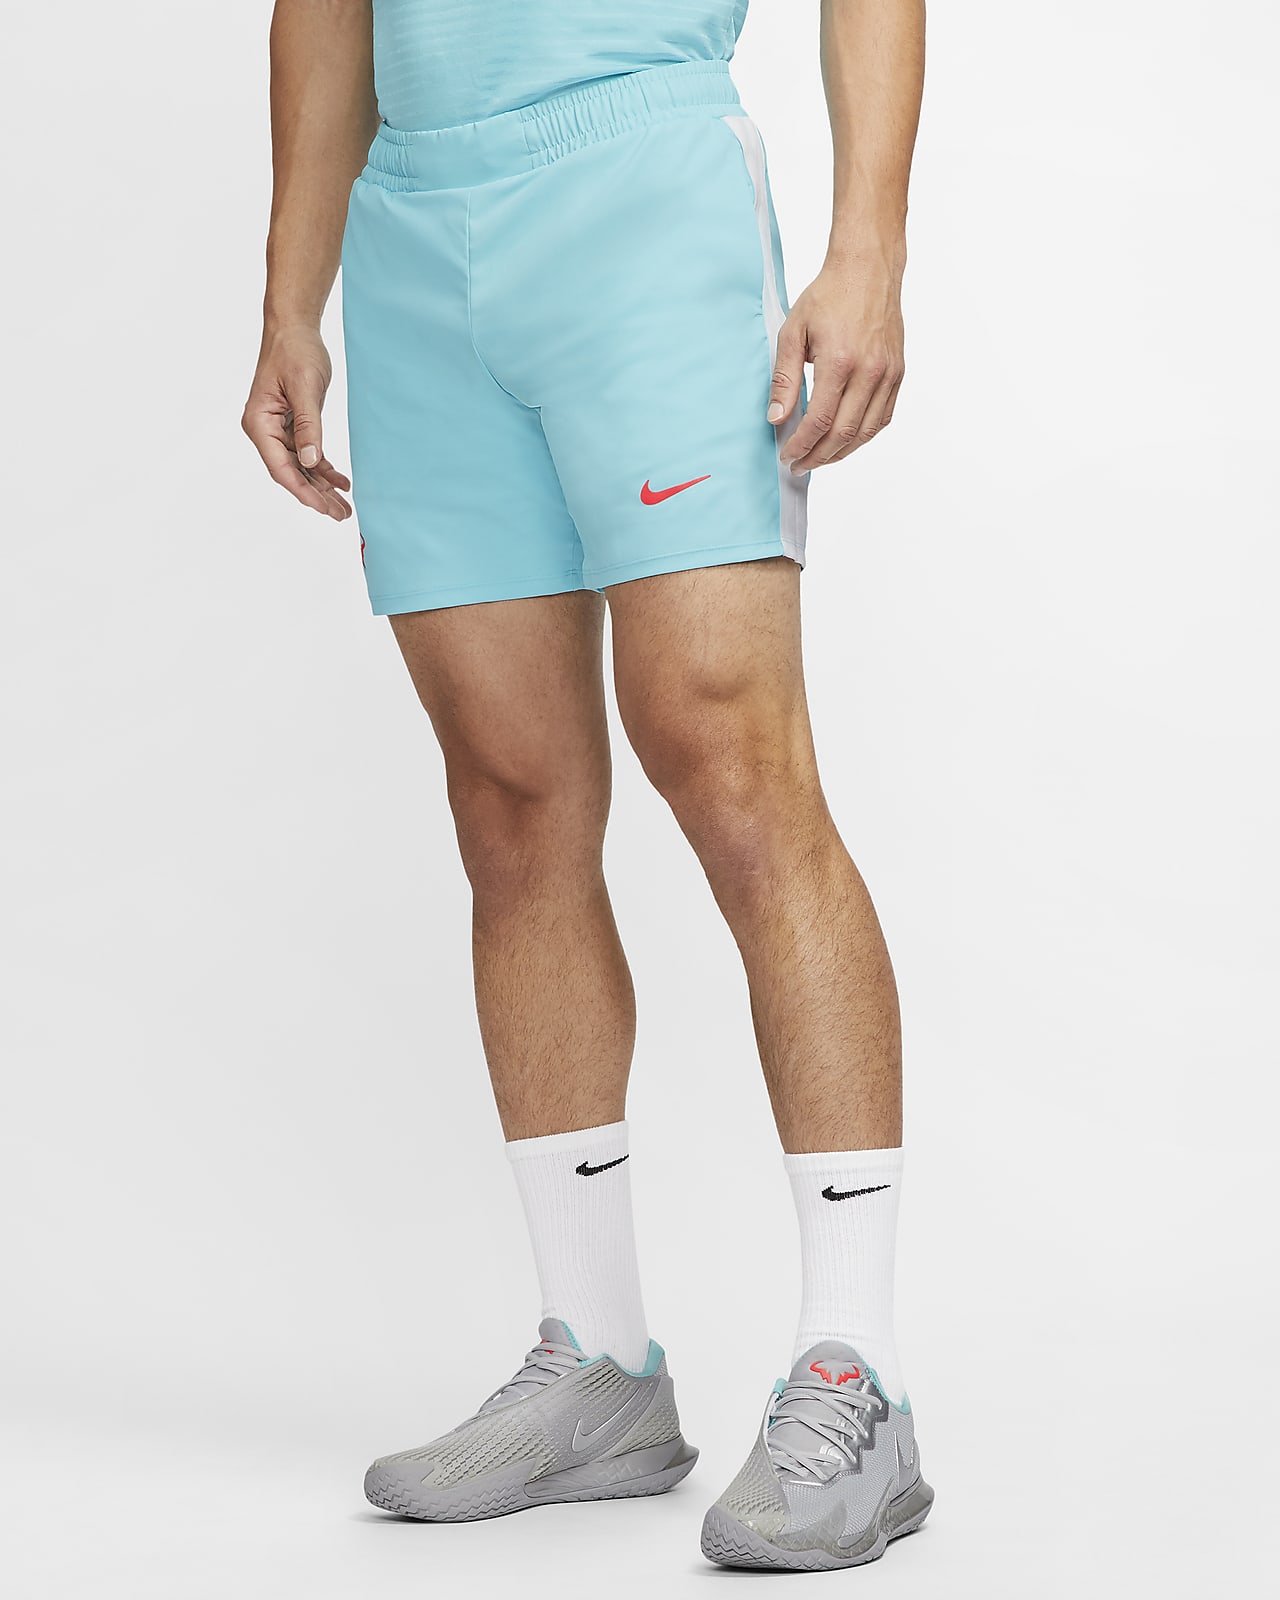 nike mens tennis shorts